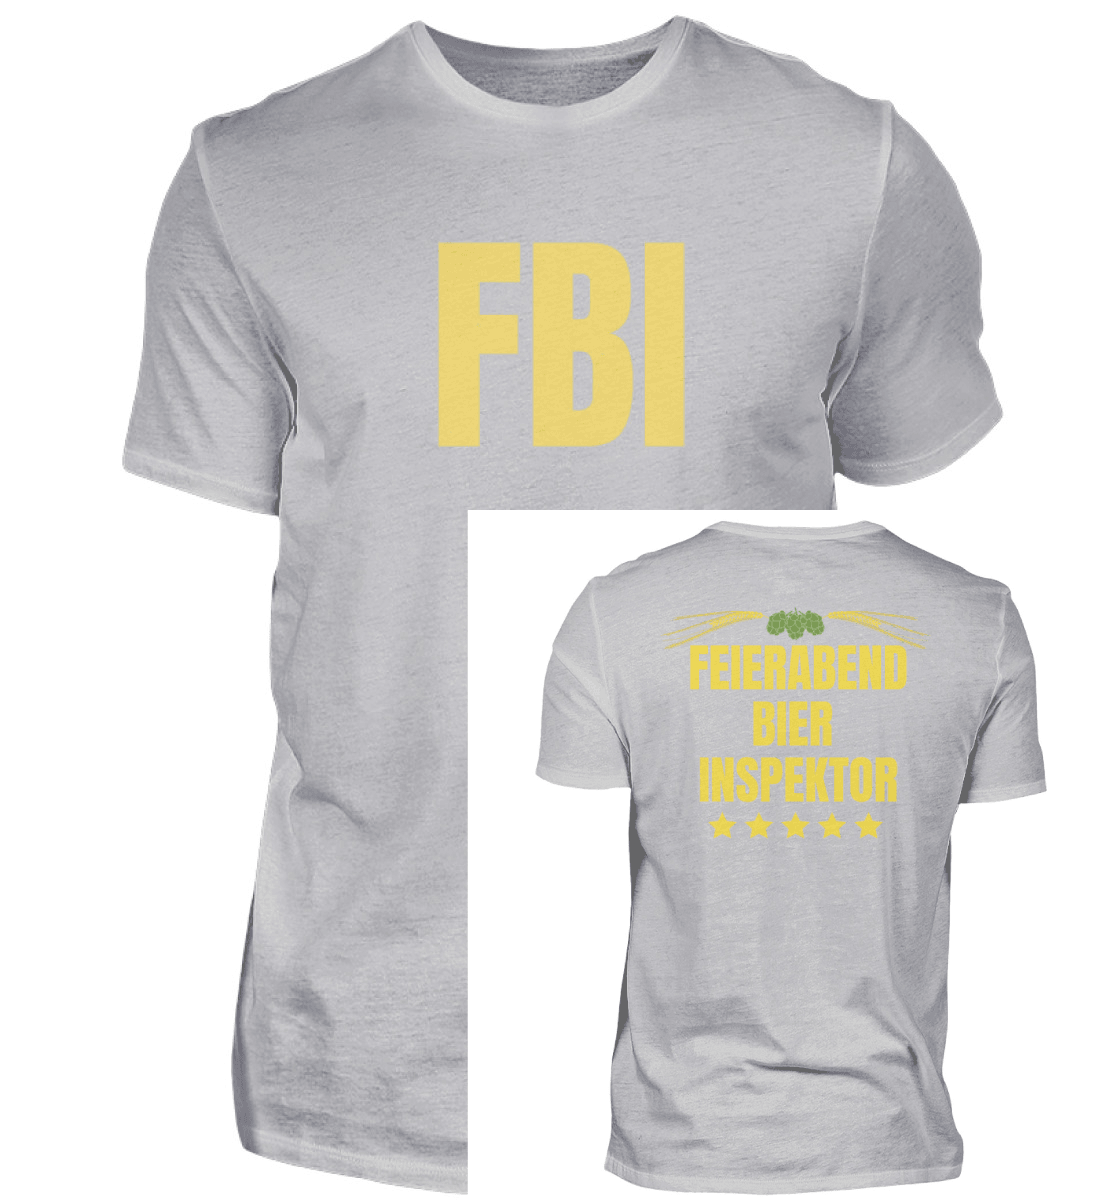 FBI - Herren Shirt - einschenken24.de